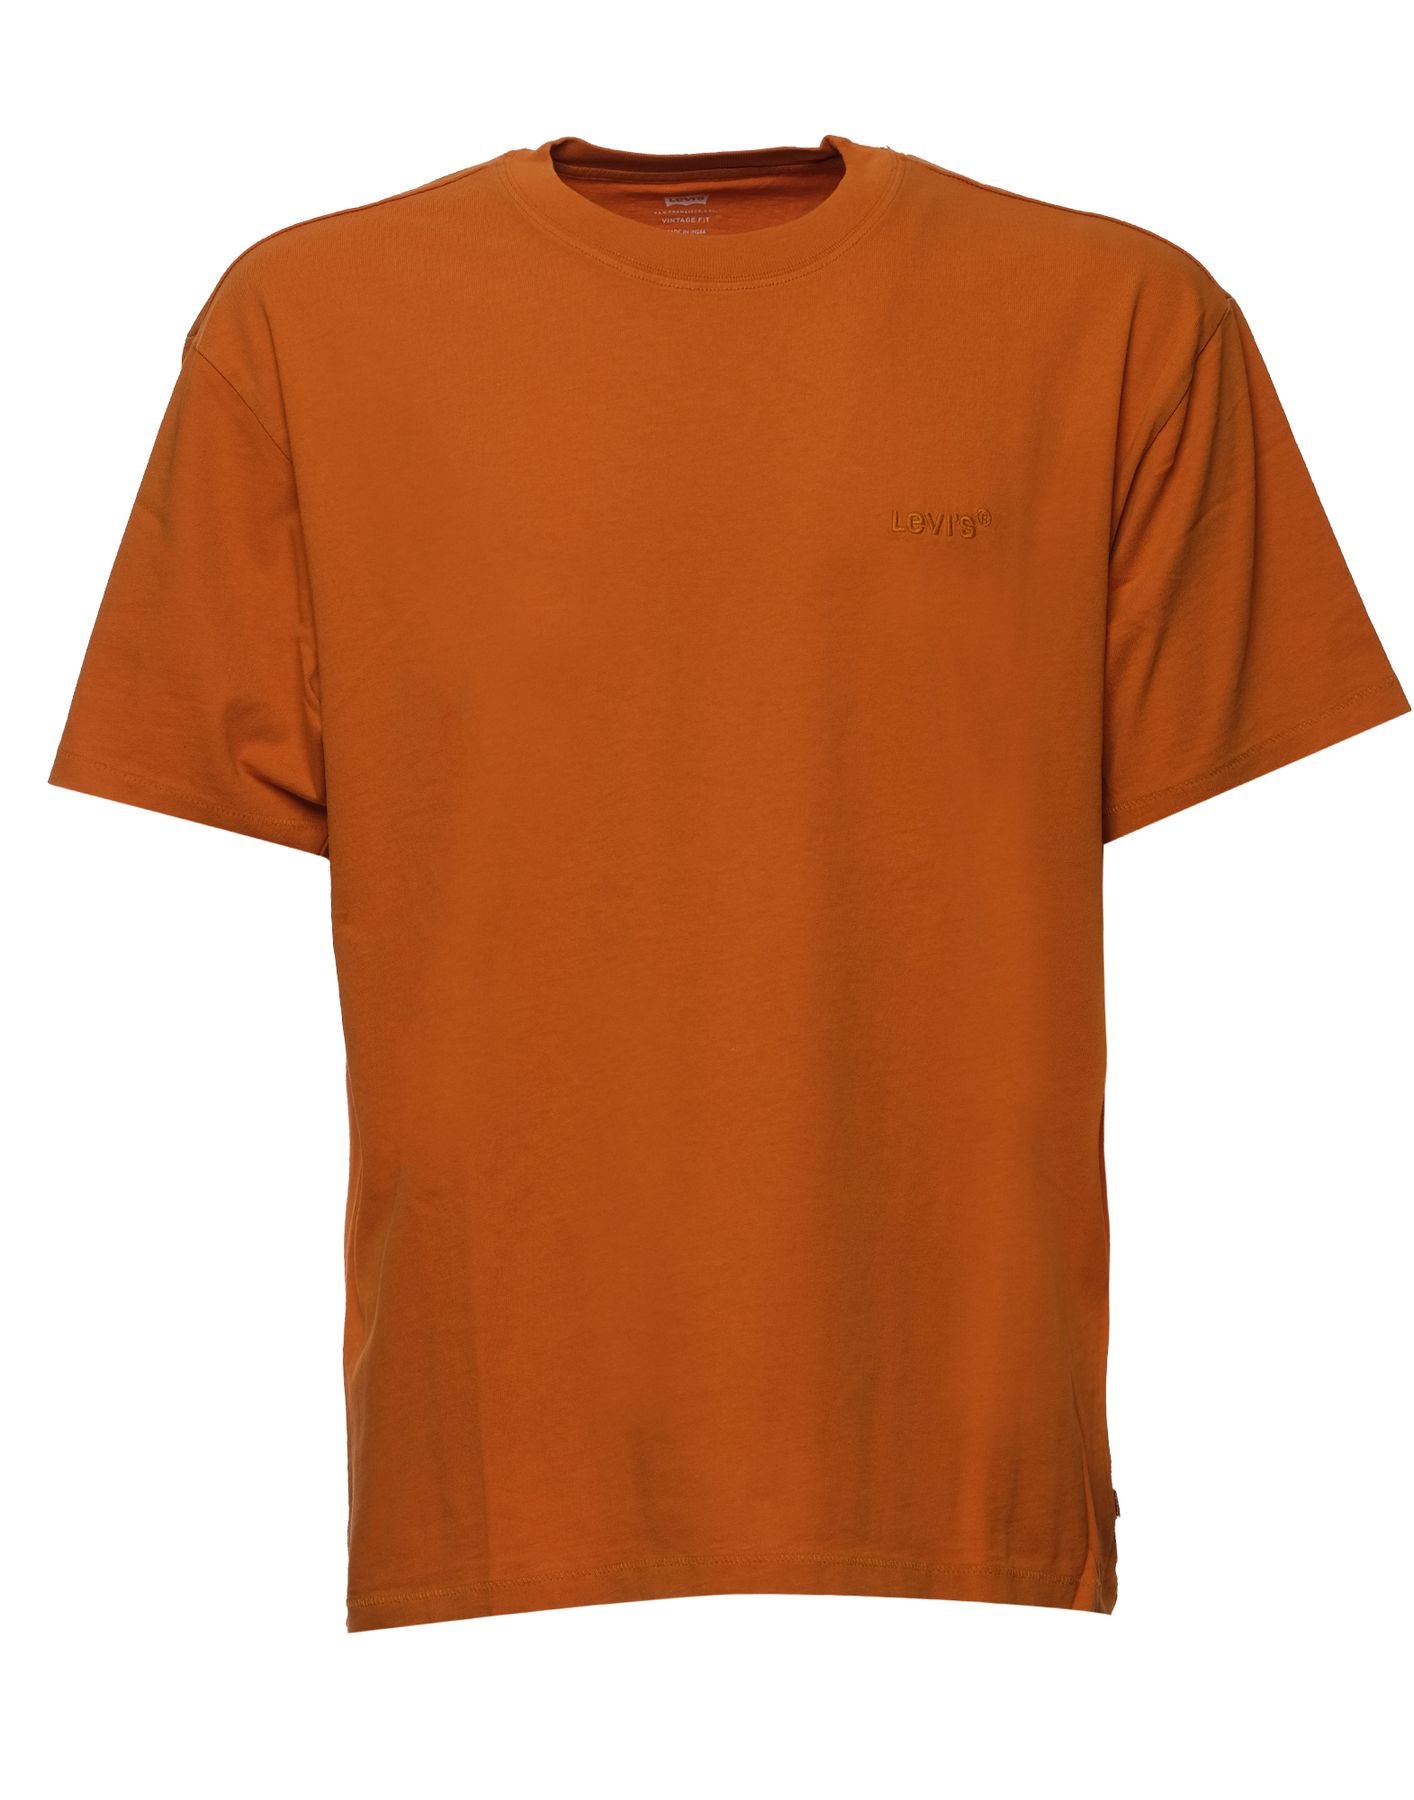 T-shirt uomo A0637 0070 DESERT SUN Levi's